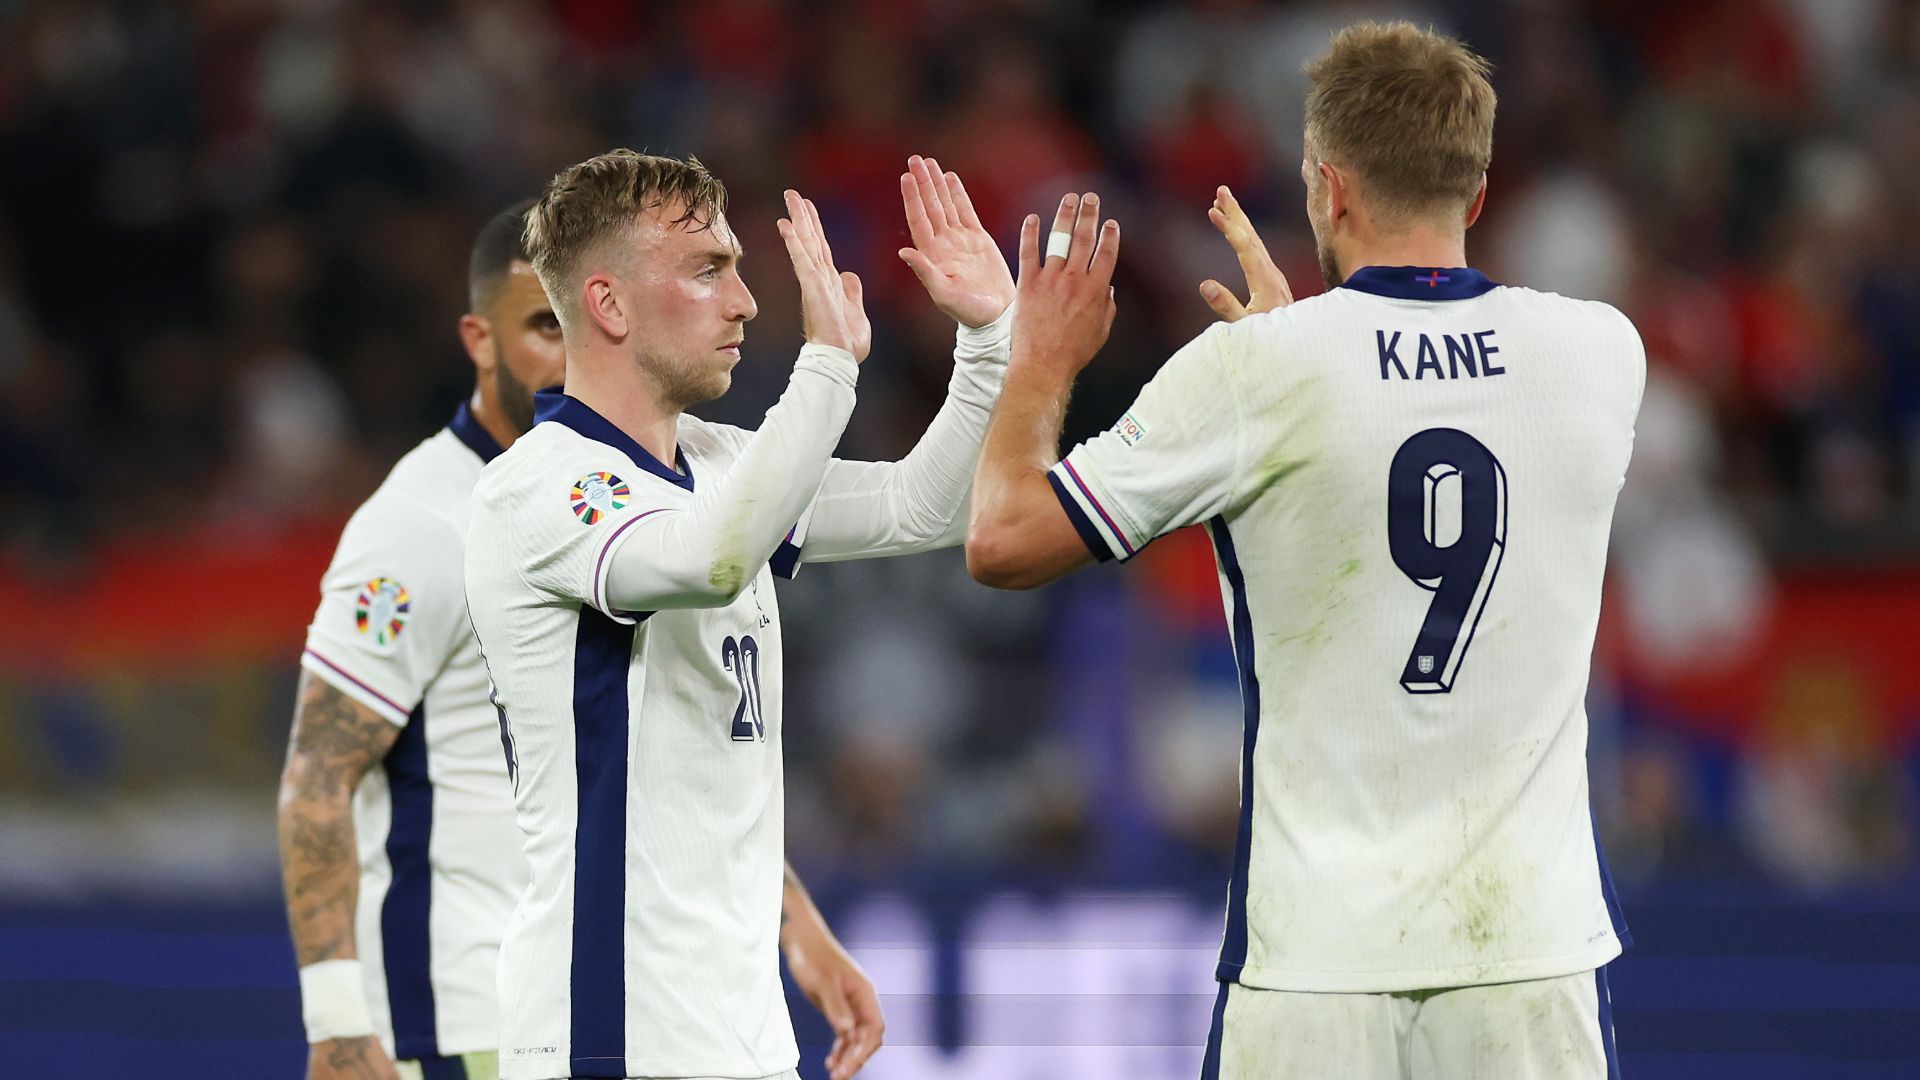 Bowen defends 'incredible' Kane